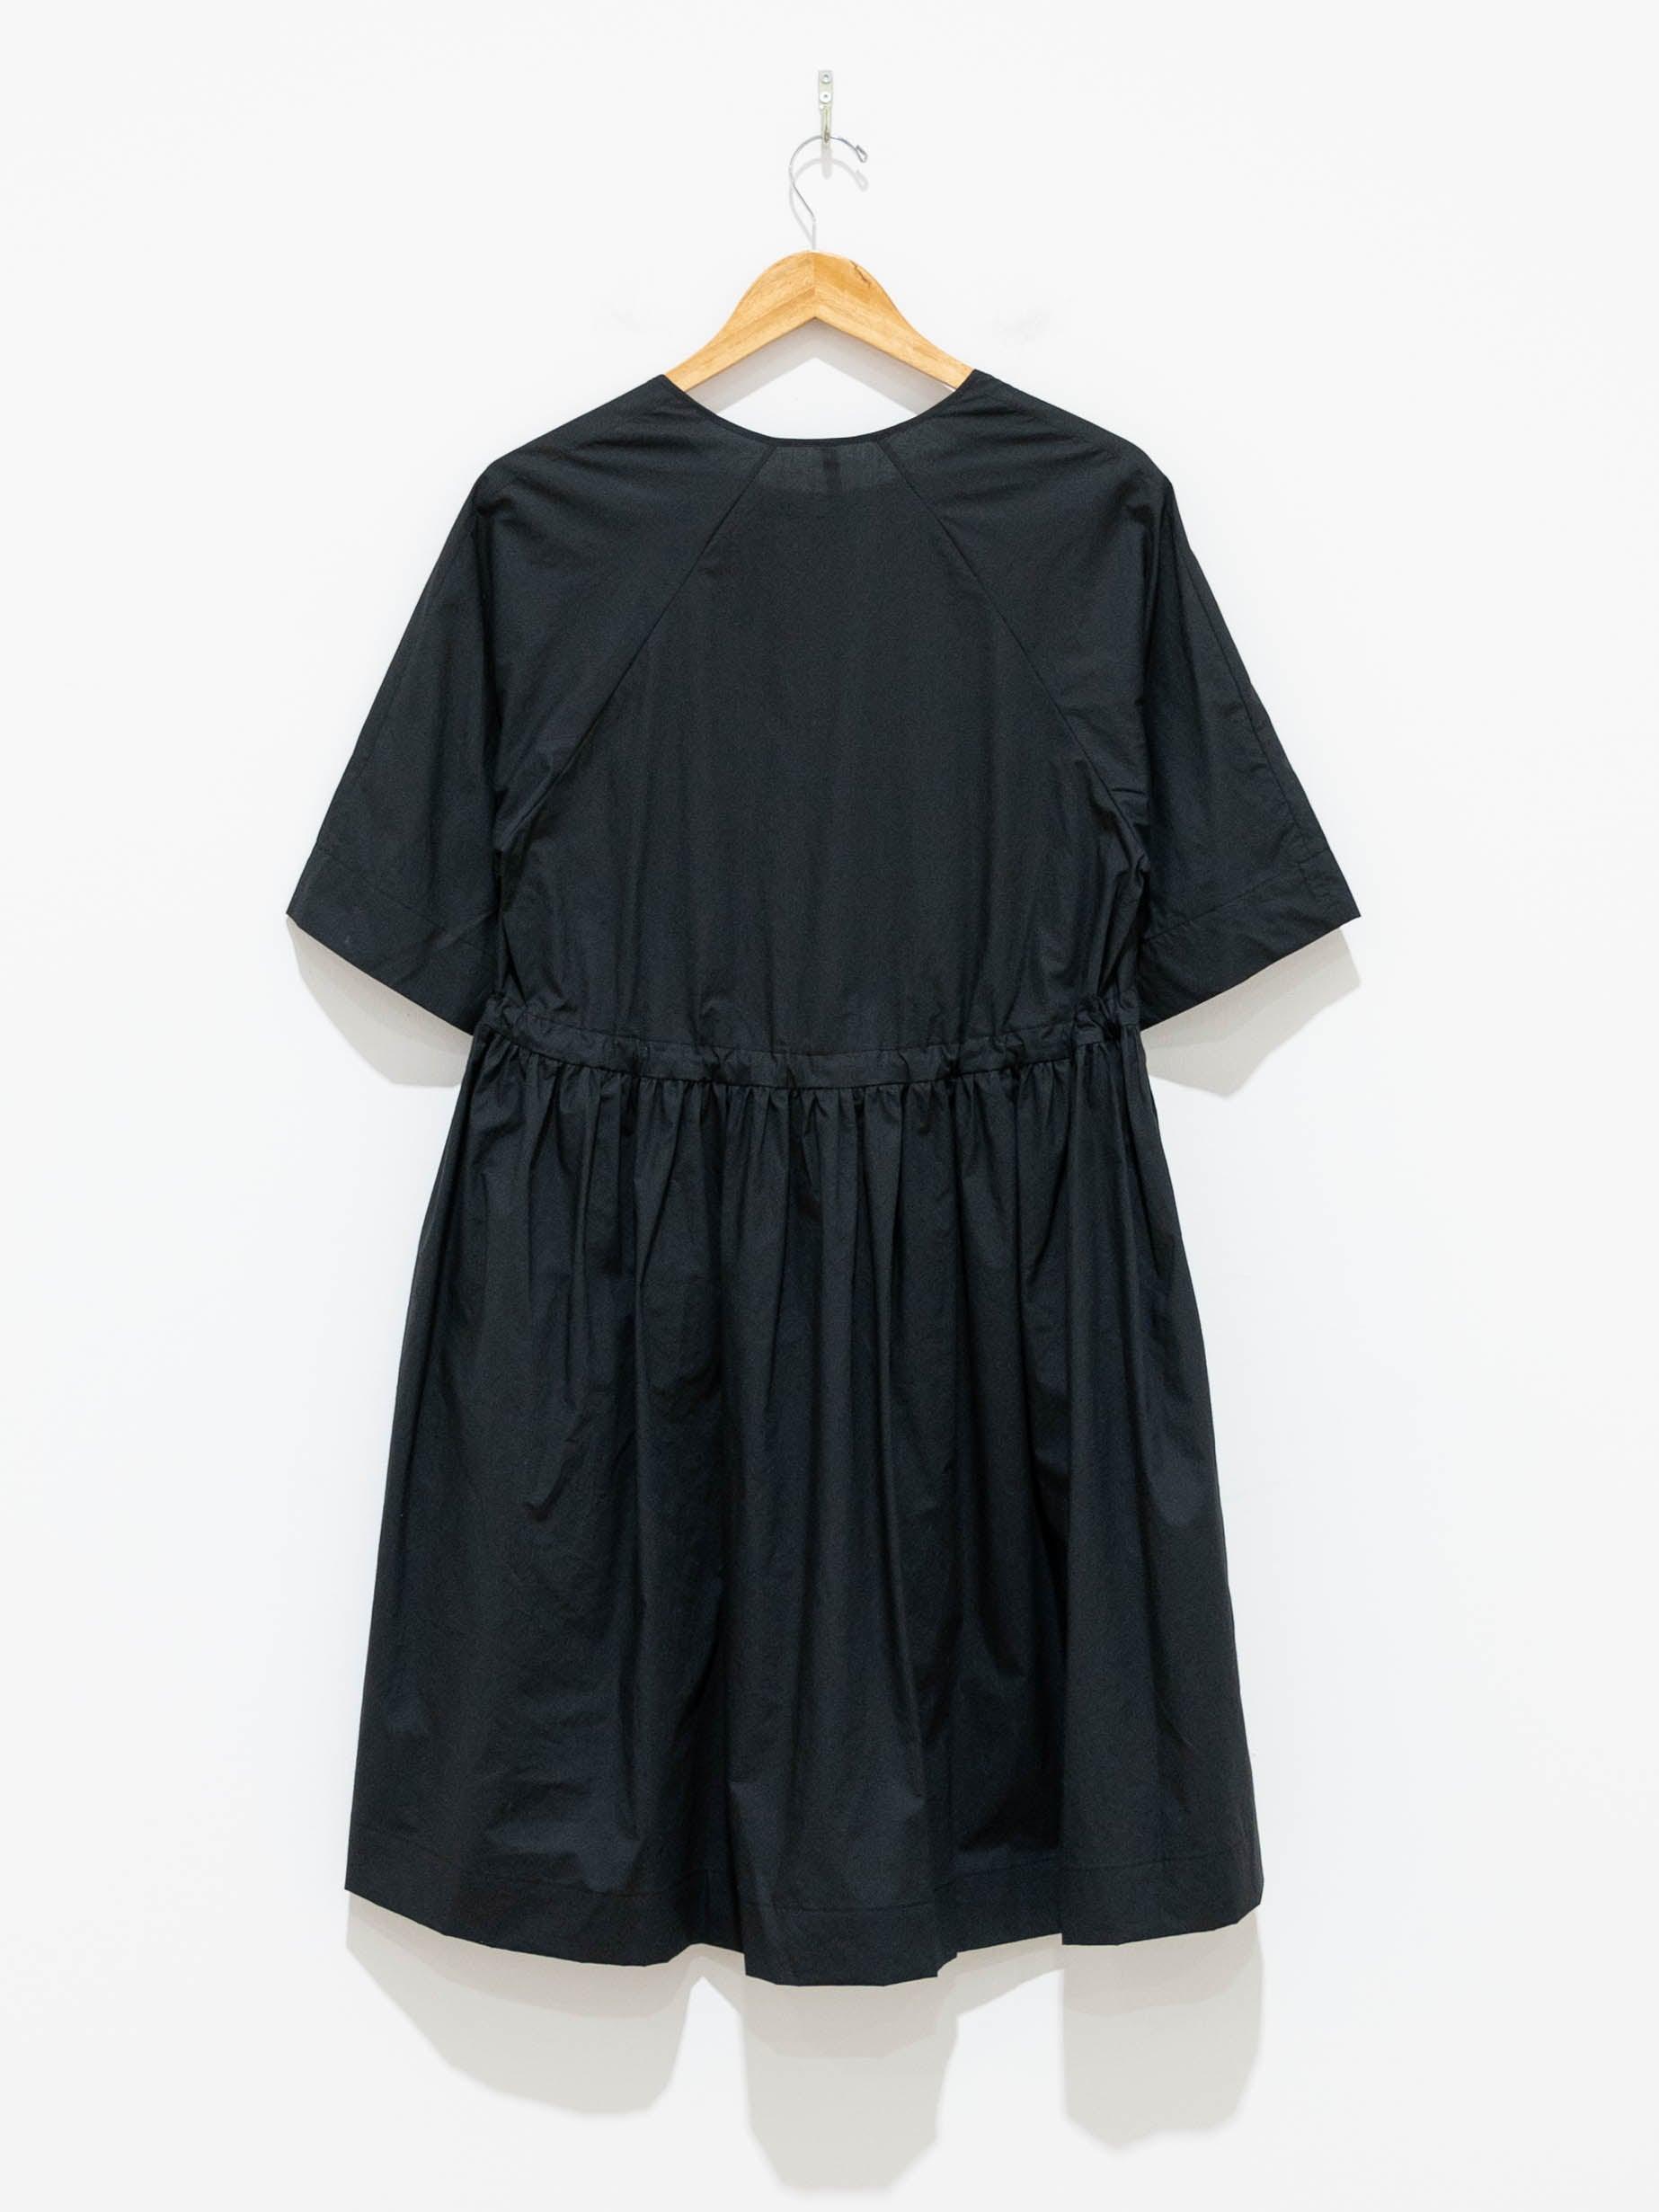 Namu Shop - Sara Lanzi Minetta Dress - Black Poplin